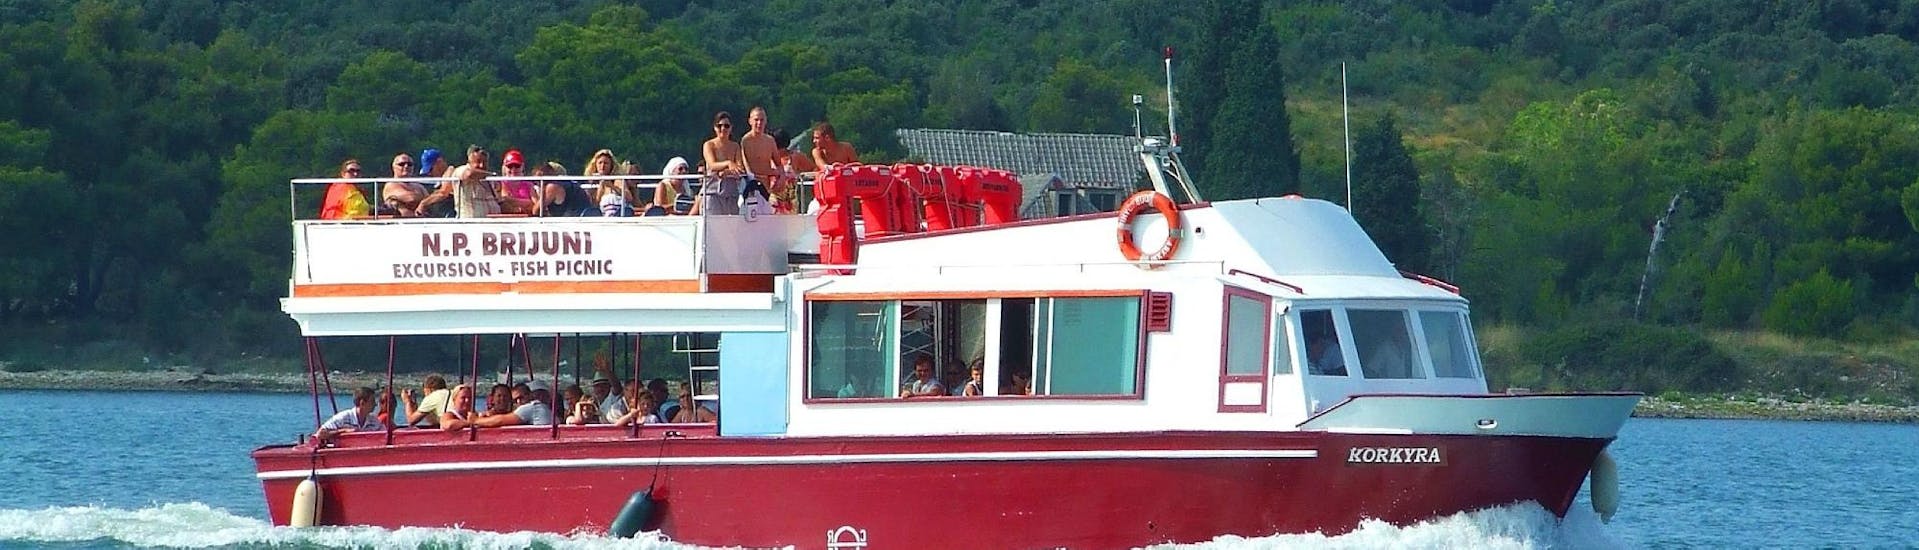 Le bateau lors de la Balade en bateau de Pula au parc national de Brijuni  organisée par Korkyra Tour Pula.